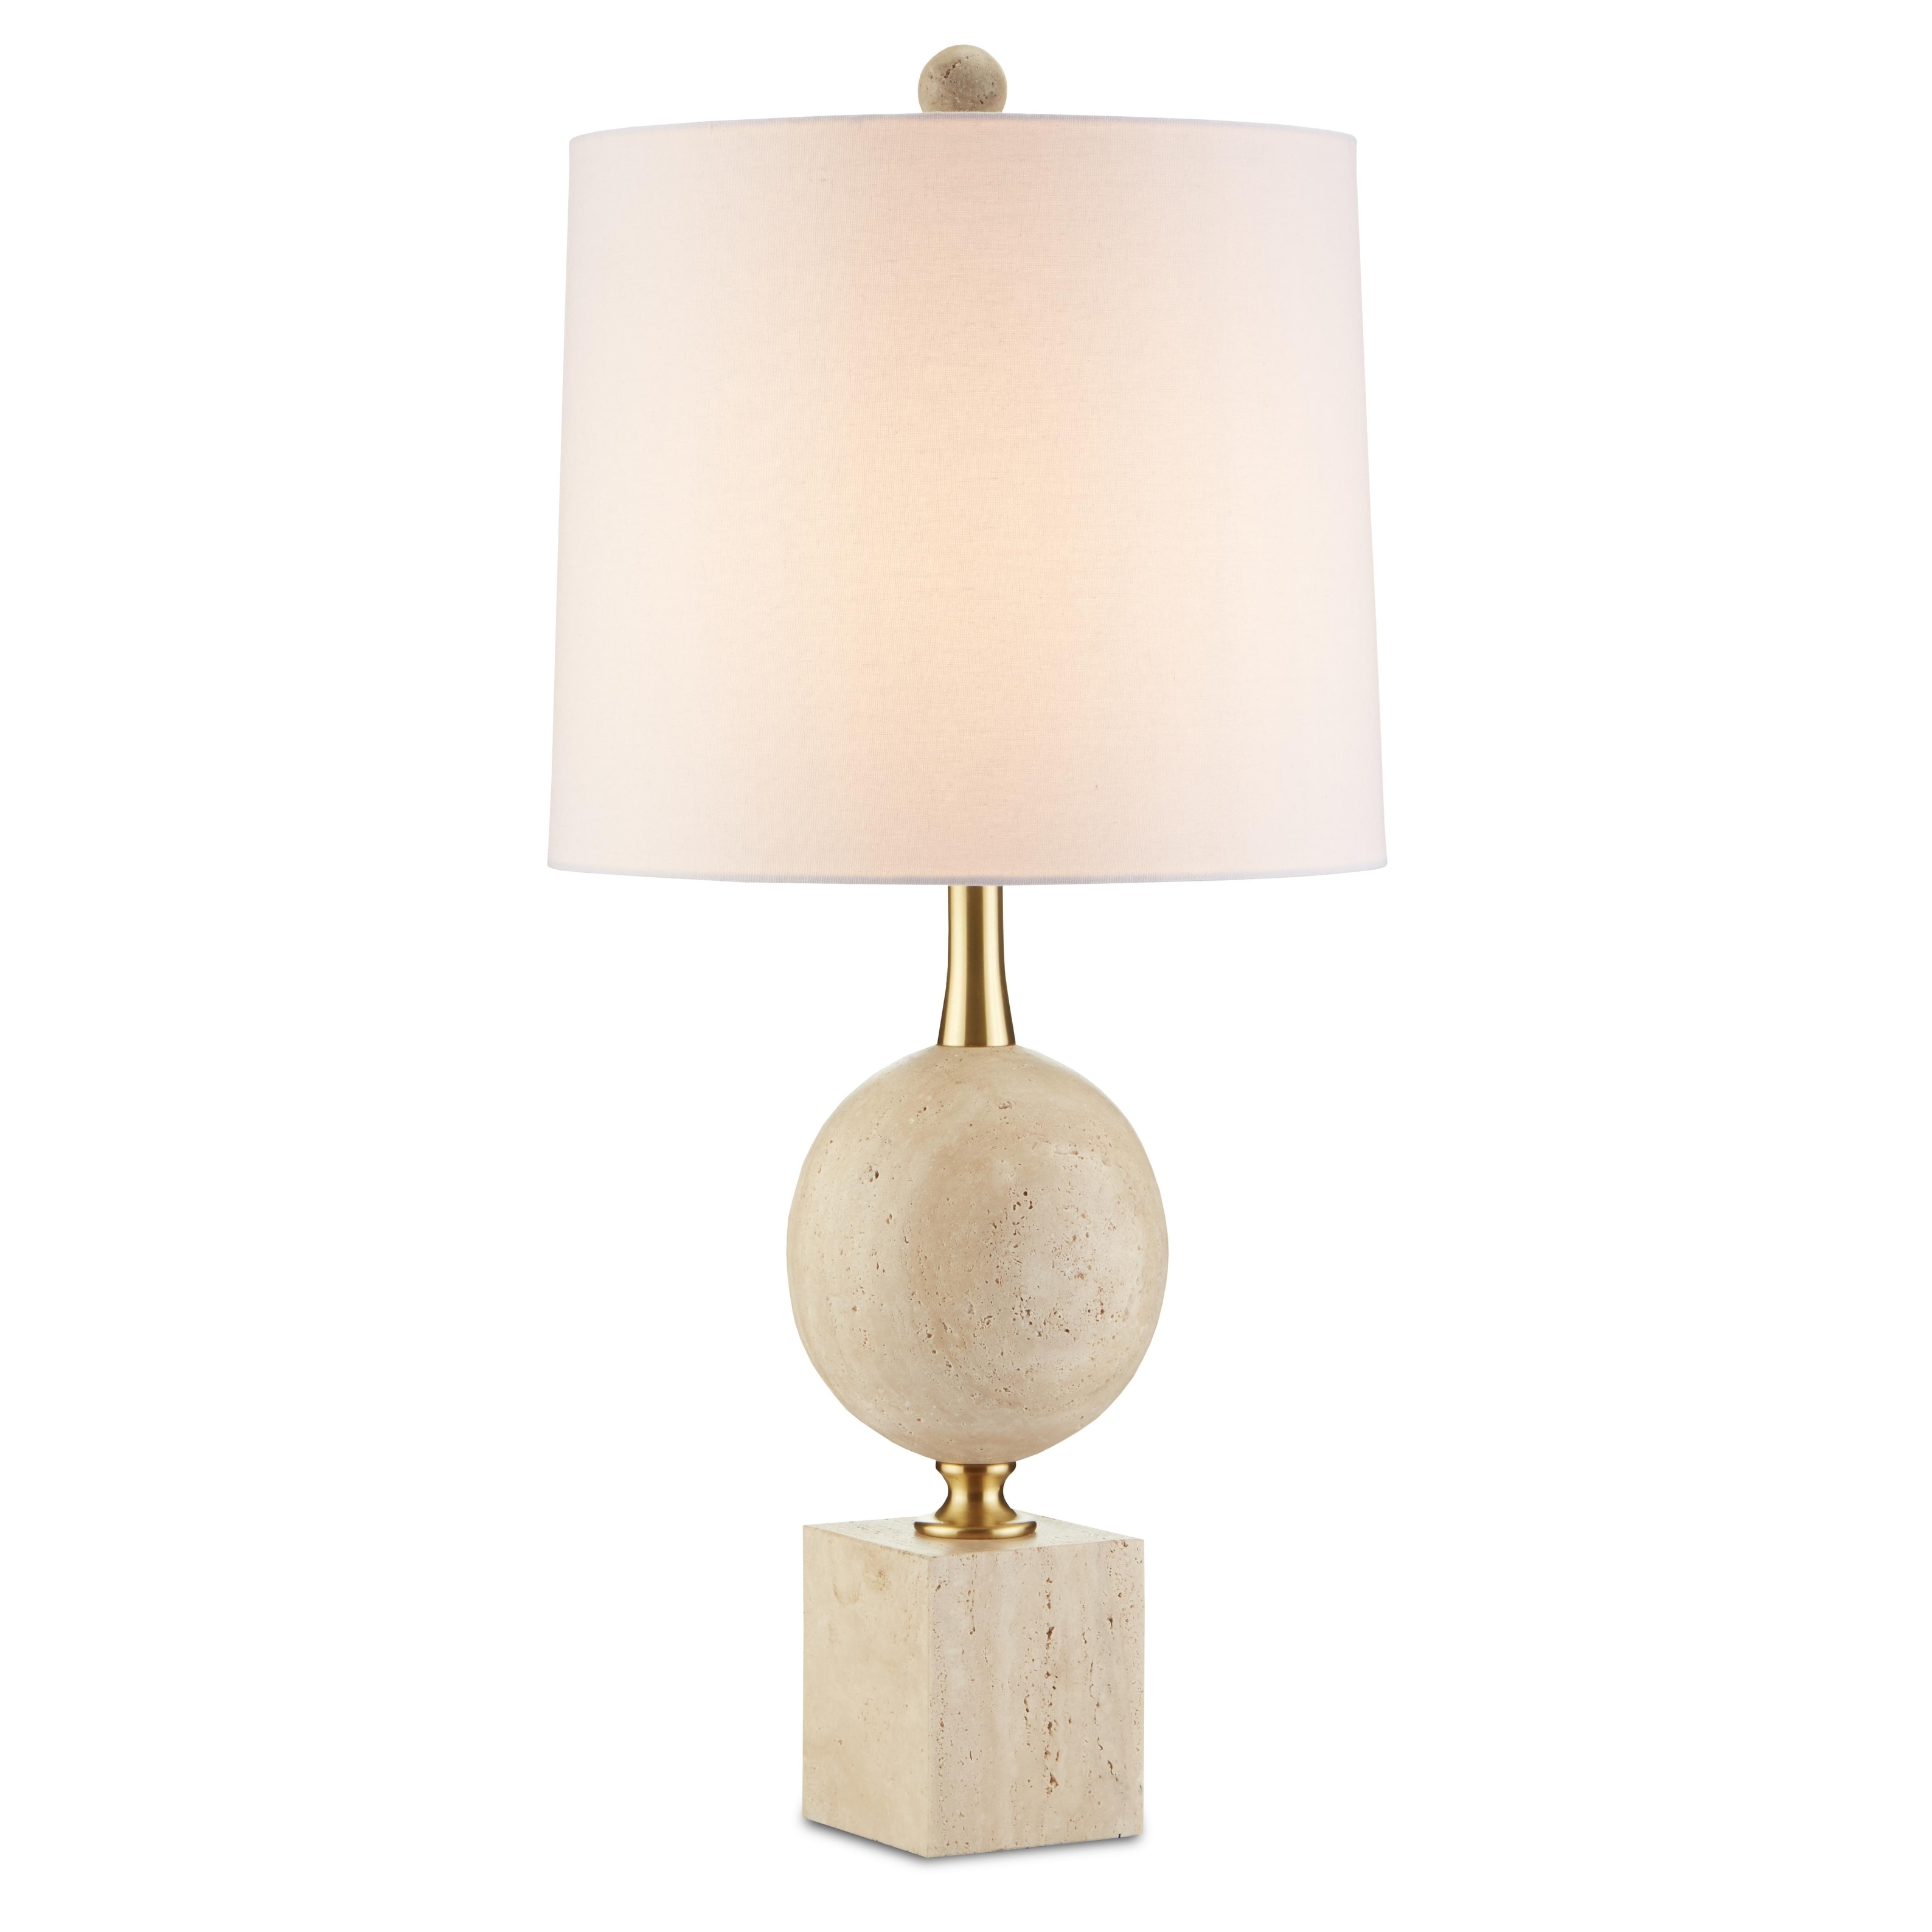 Currey & Company Adorno Table Lamp - 32.25